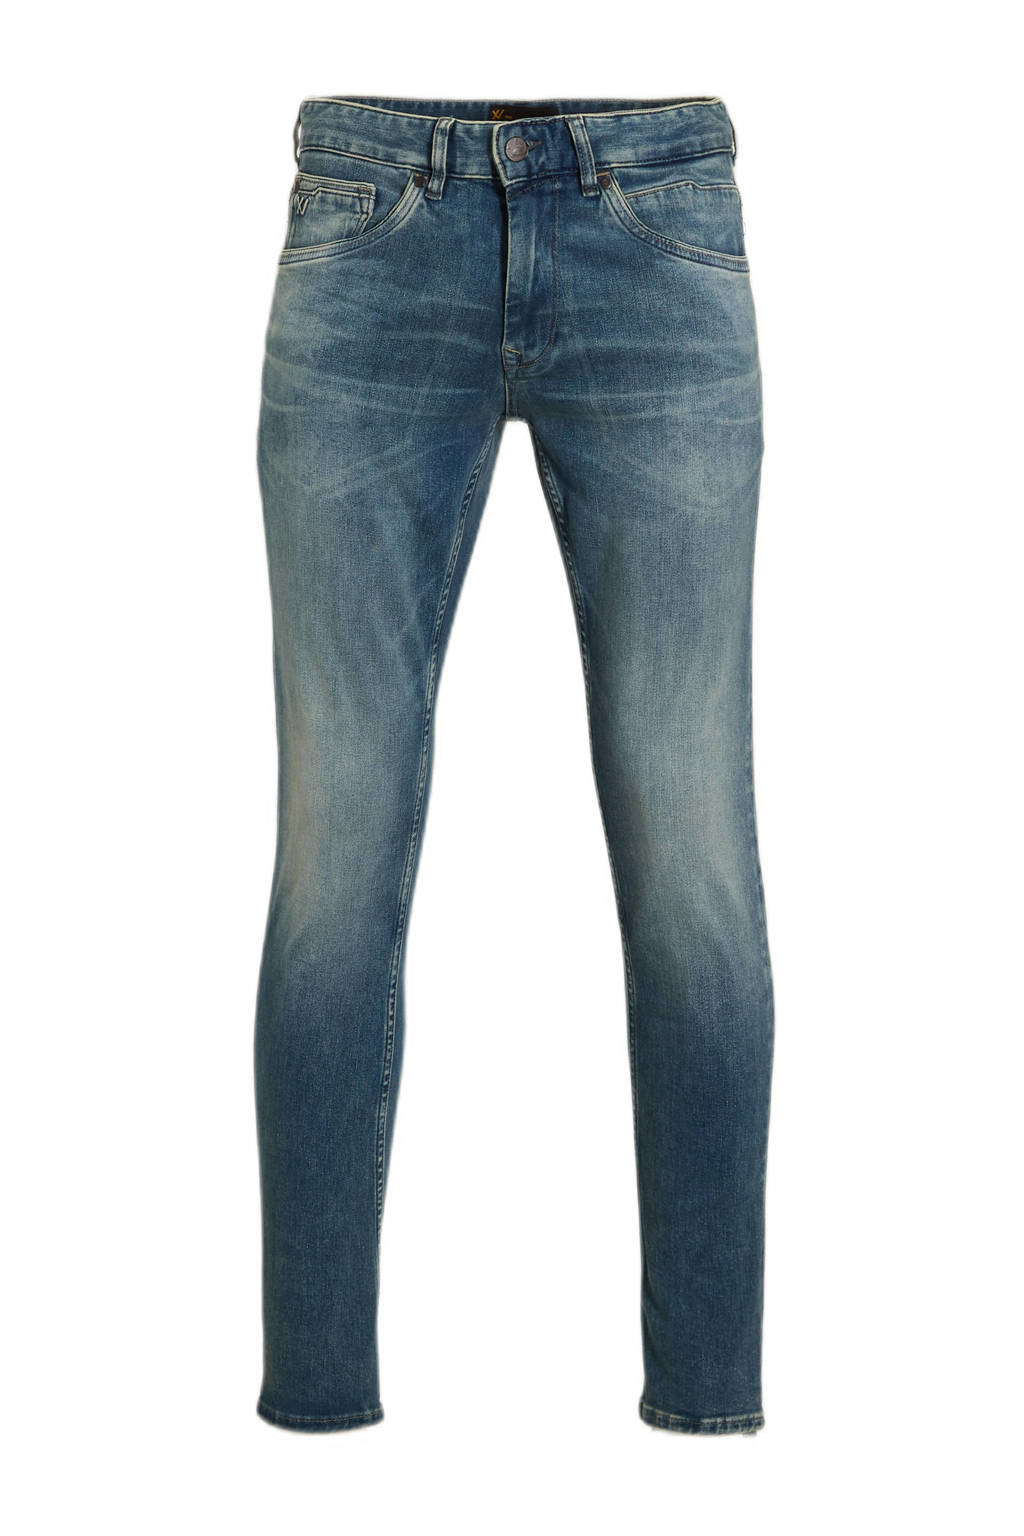 PME Legend slim XV dirt fit wash wehkamp jeans sky 